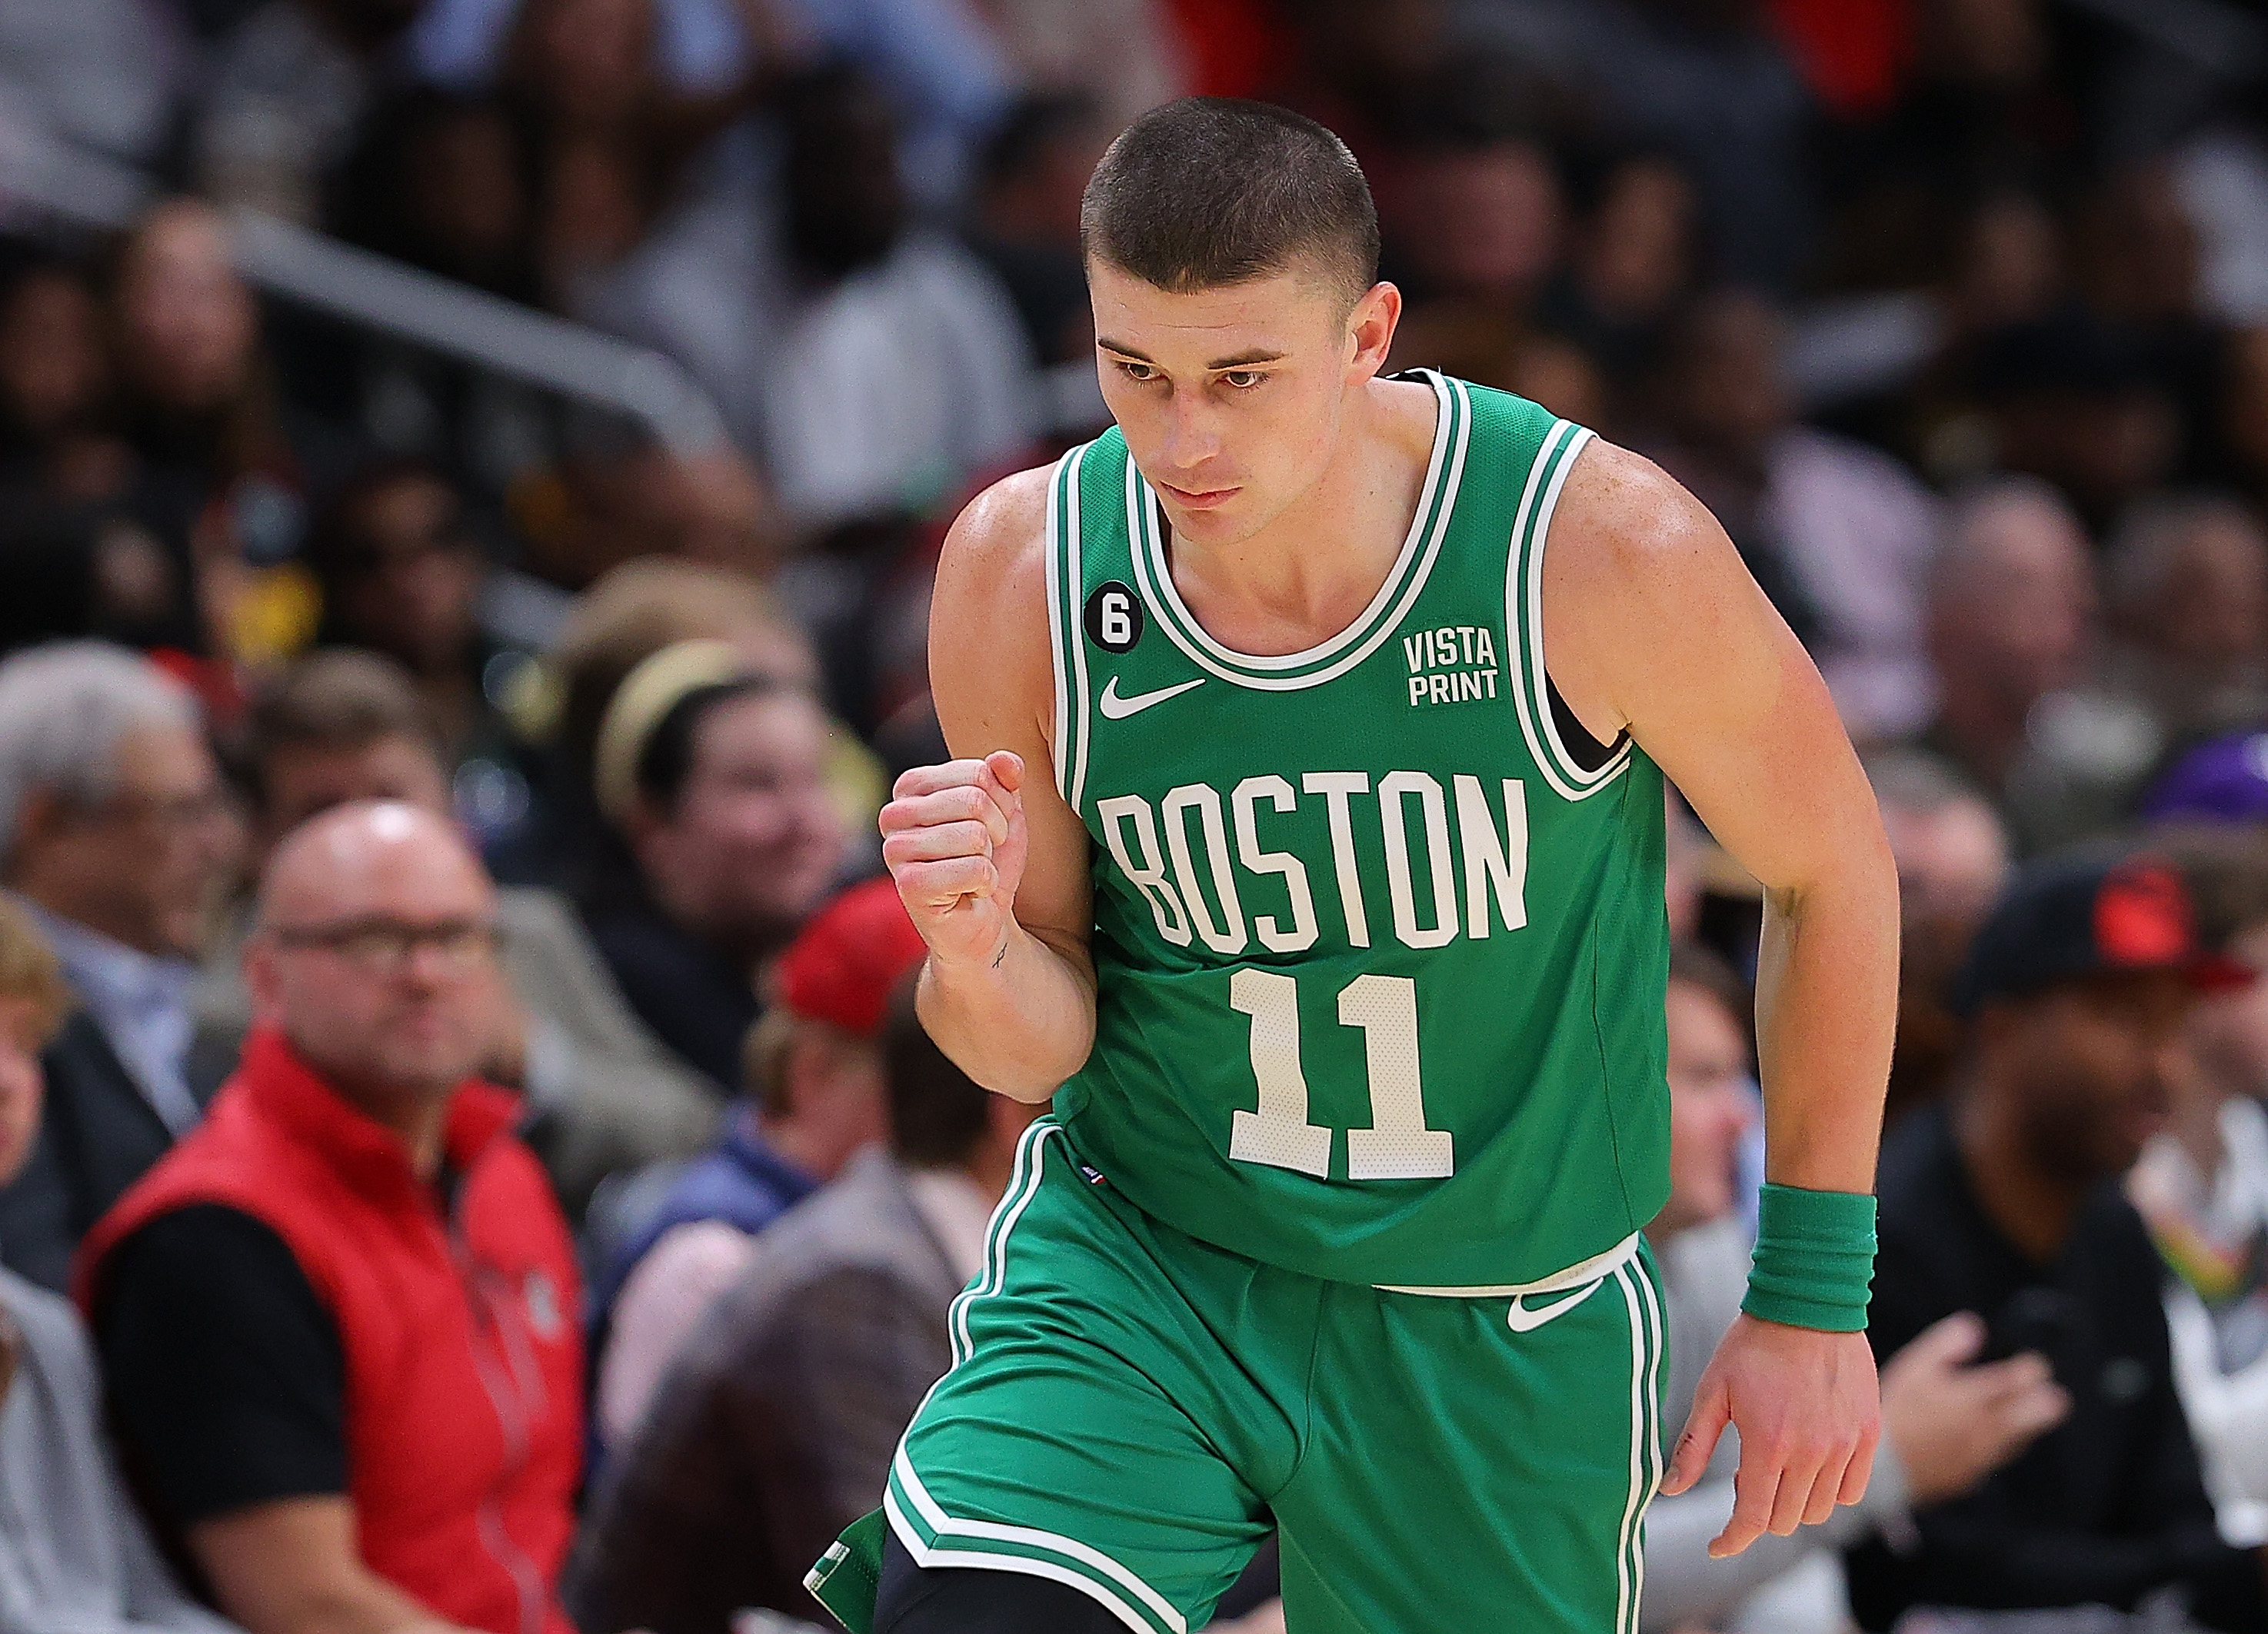 Payton Pritchard of the Boston Celtics reacts after hitting a three-point basket.